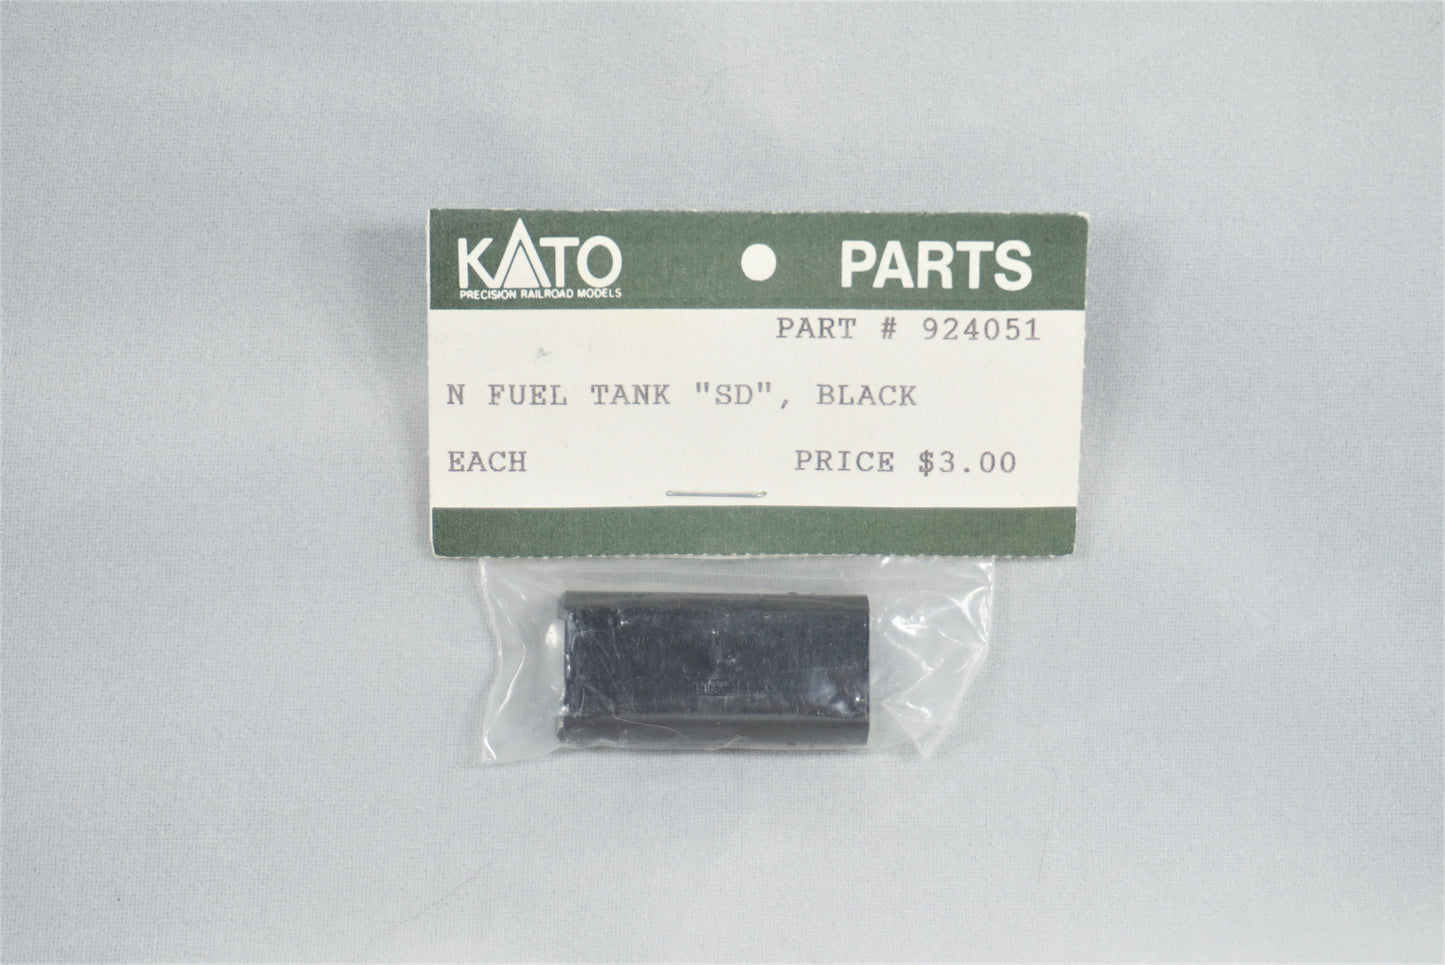 KAT-924051 - Fuel tank - SD - Black